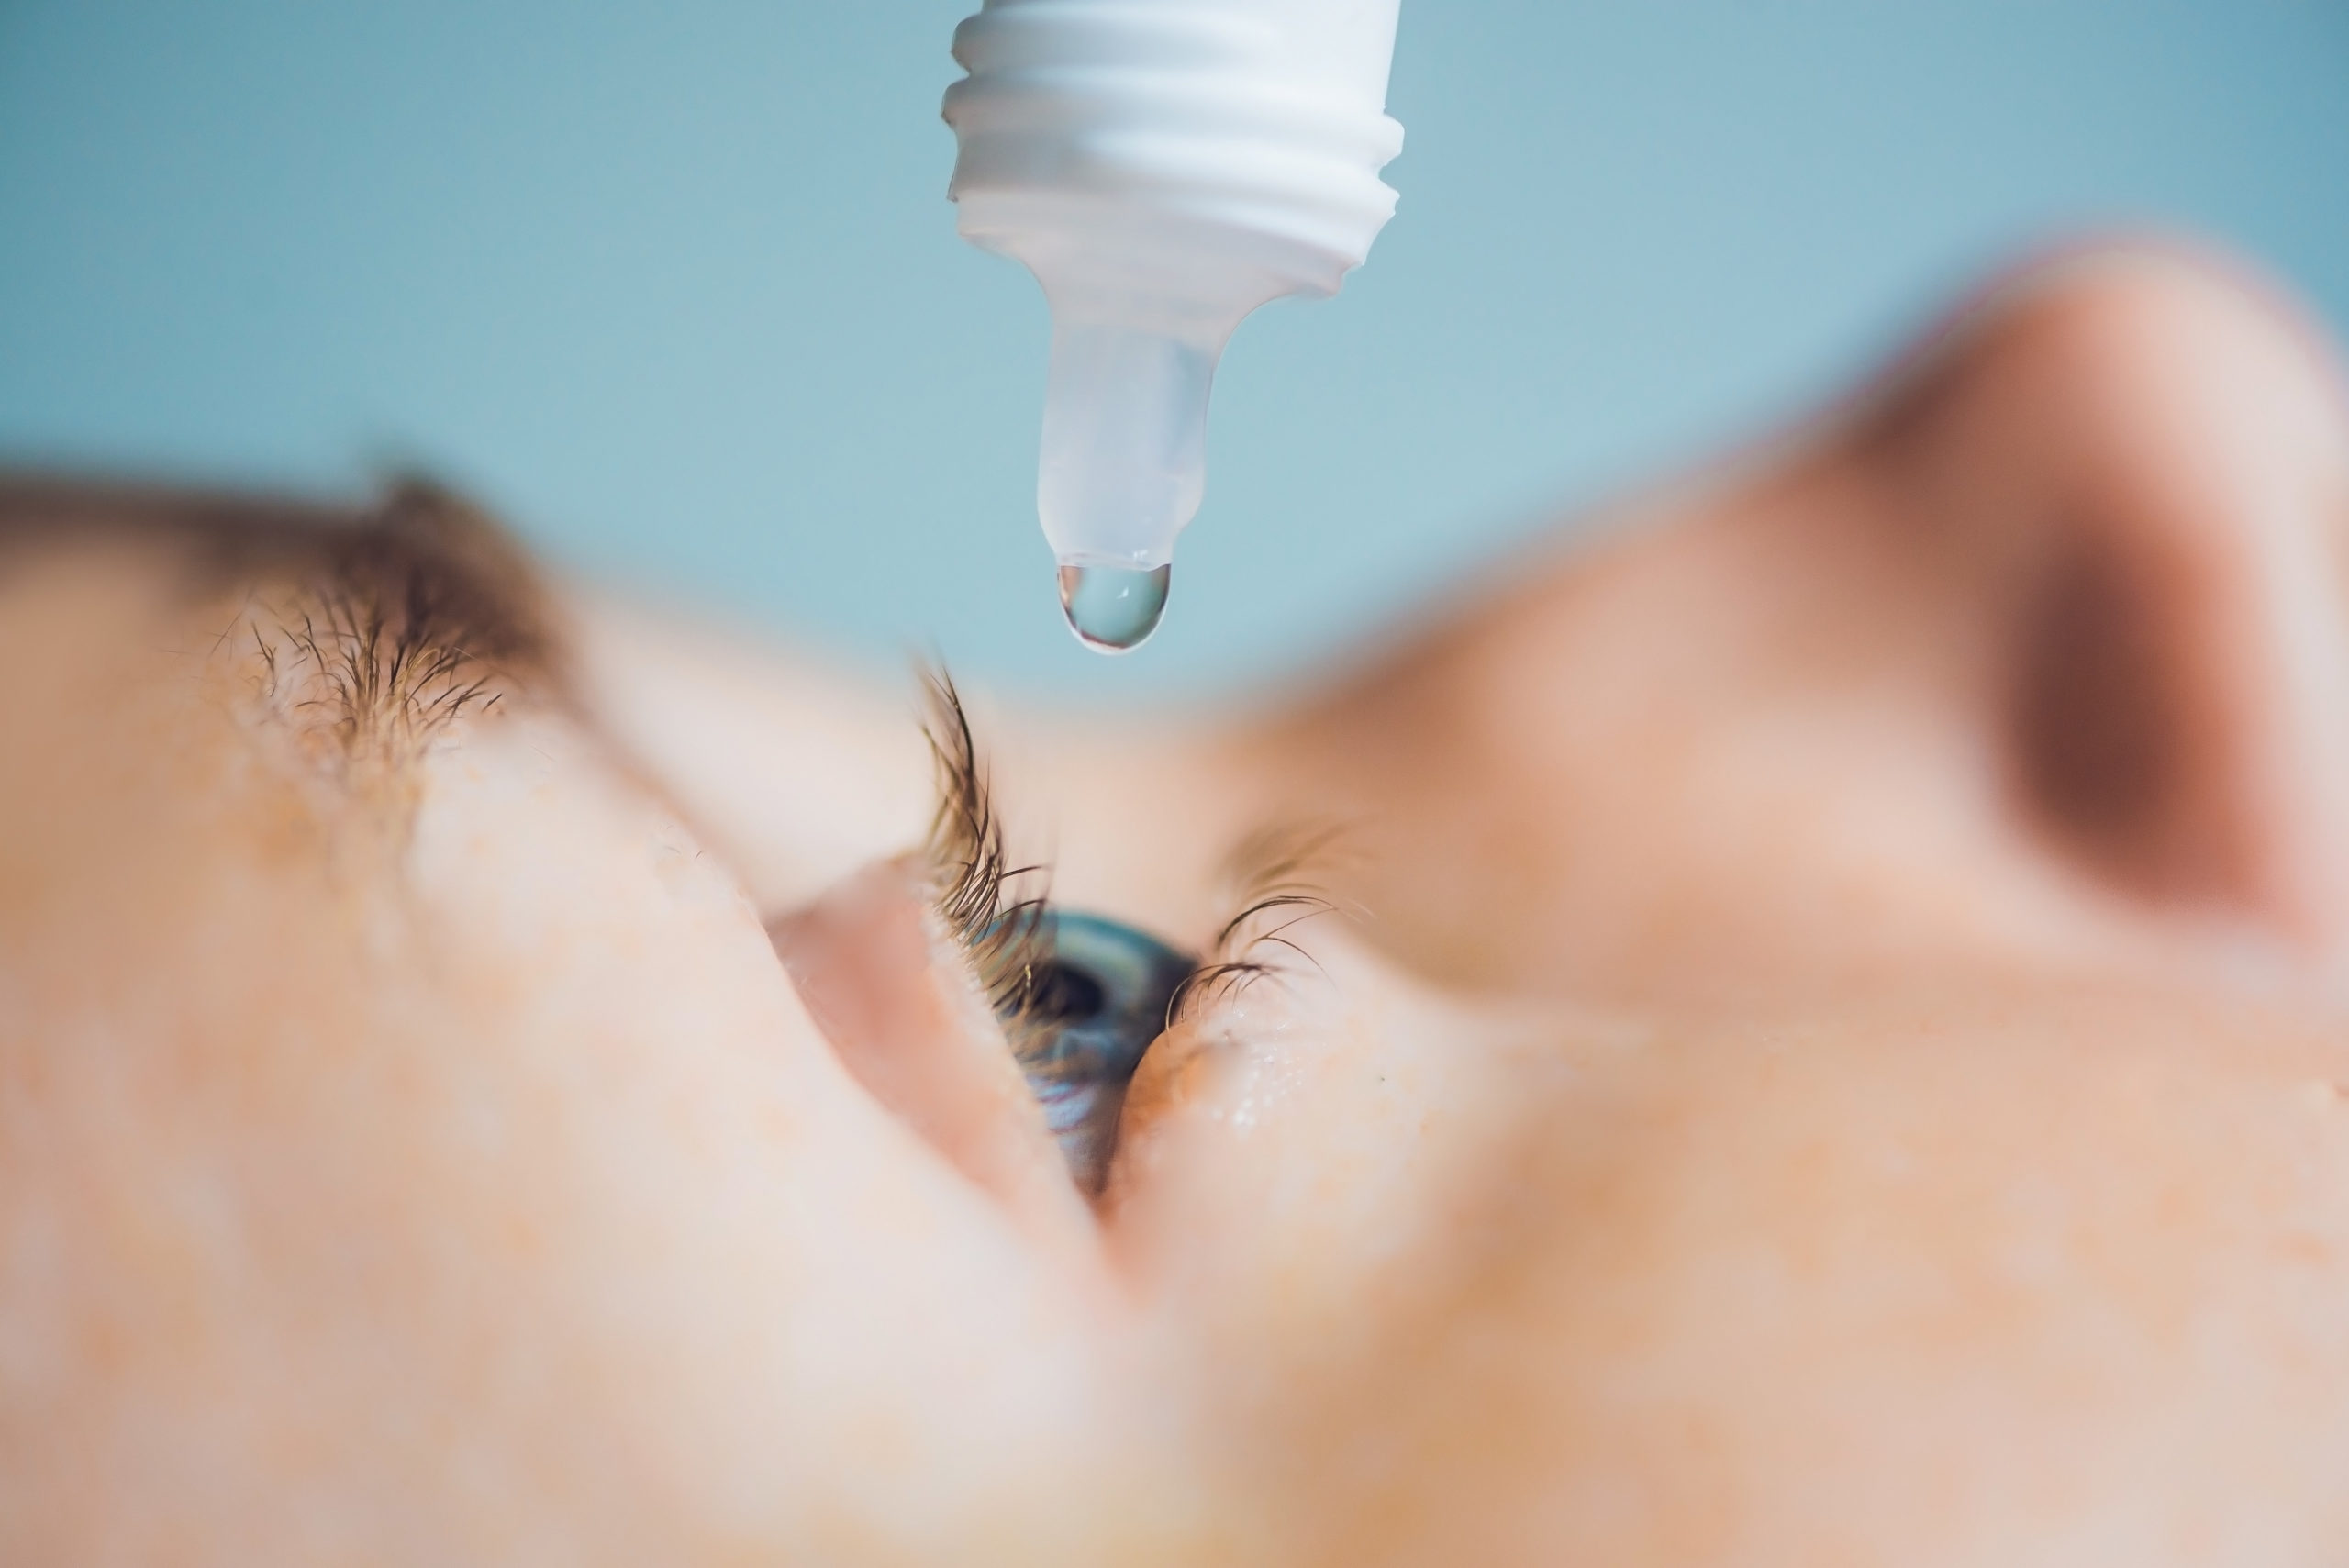 Closeup of eyedropper putting liquid into open eye